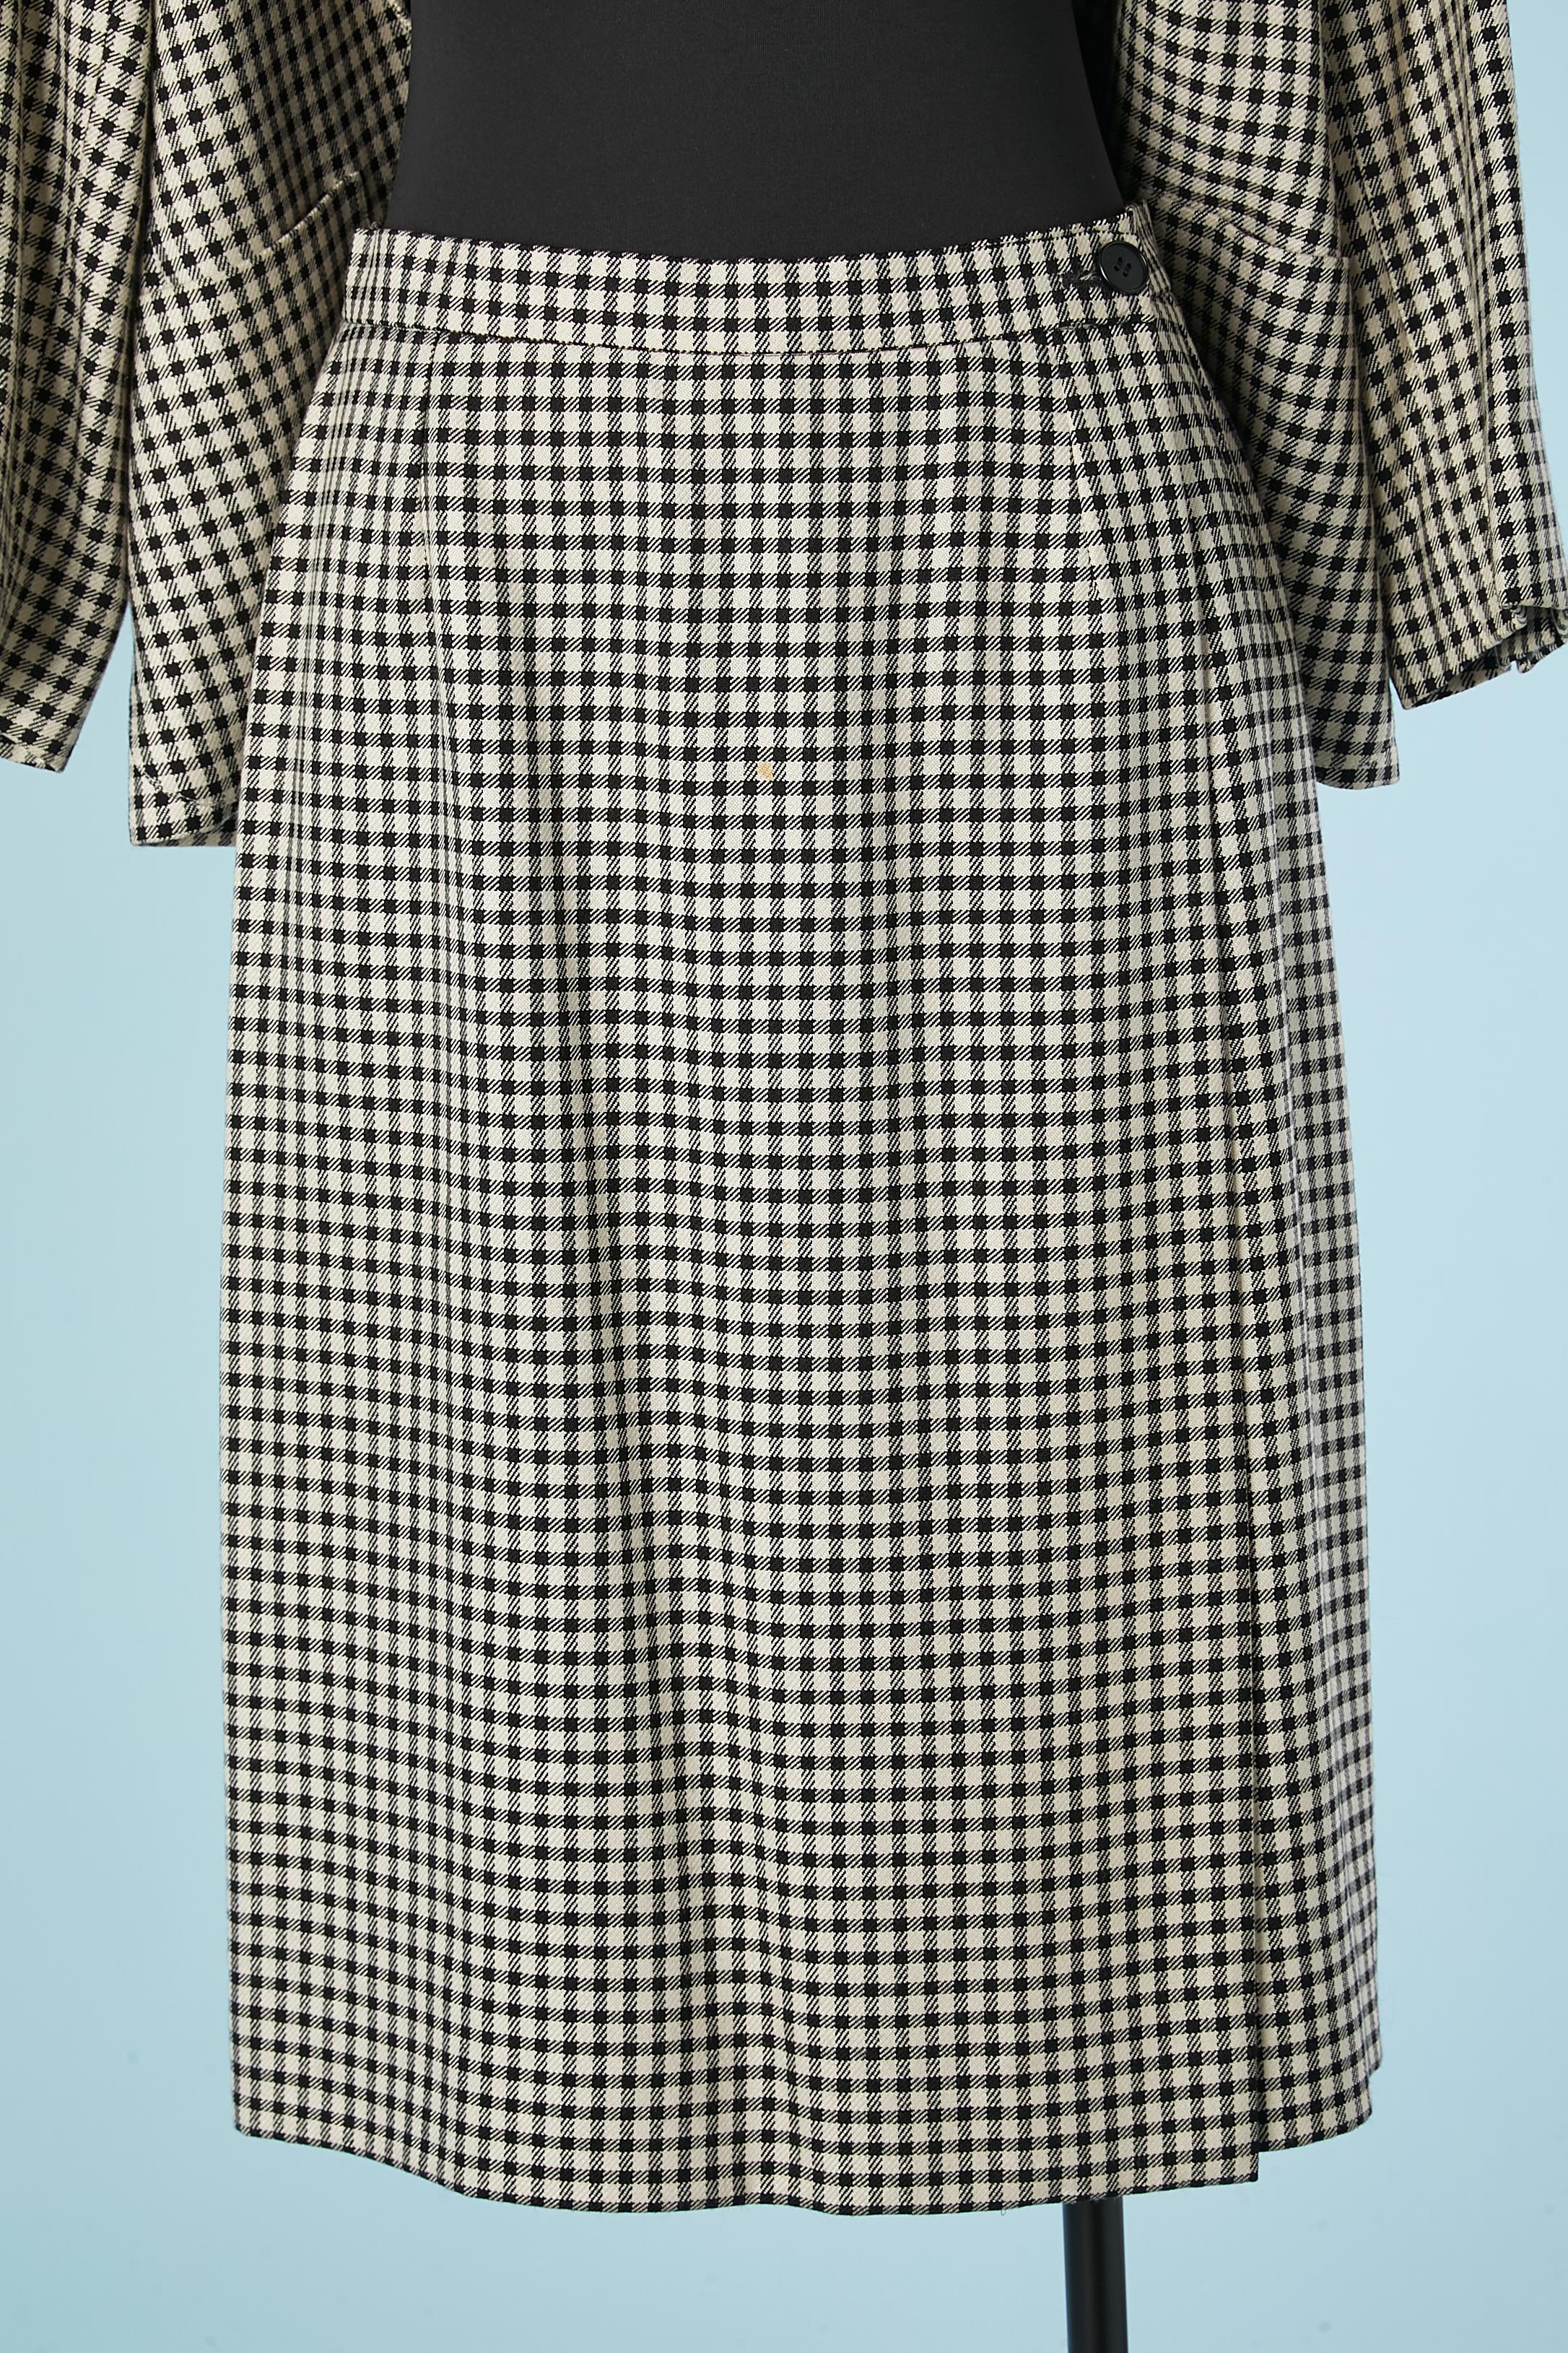 Black and white mini check pattern skirt-suit Yves Saint Laurent Variation  For Sale 2